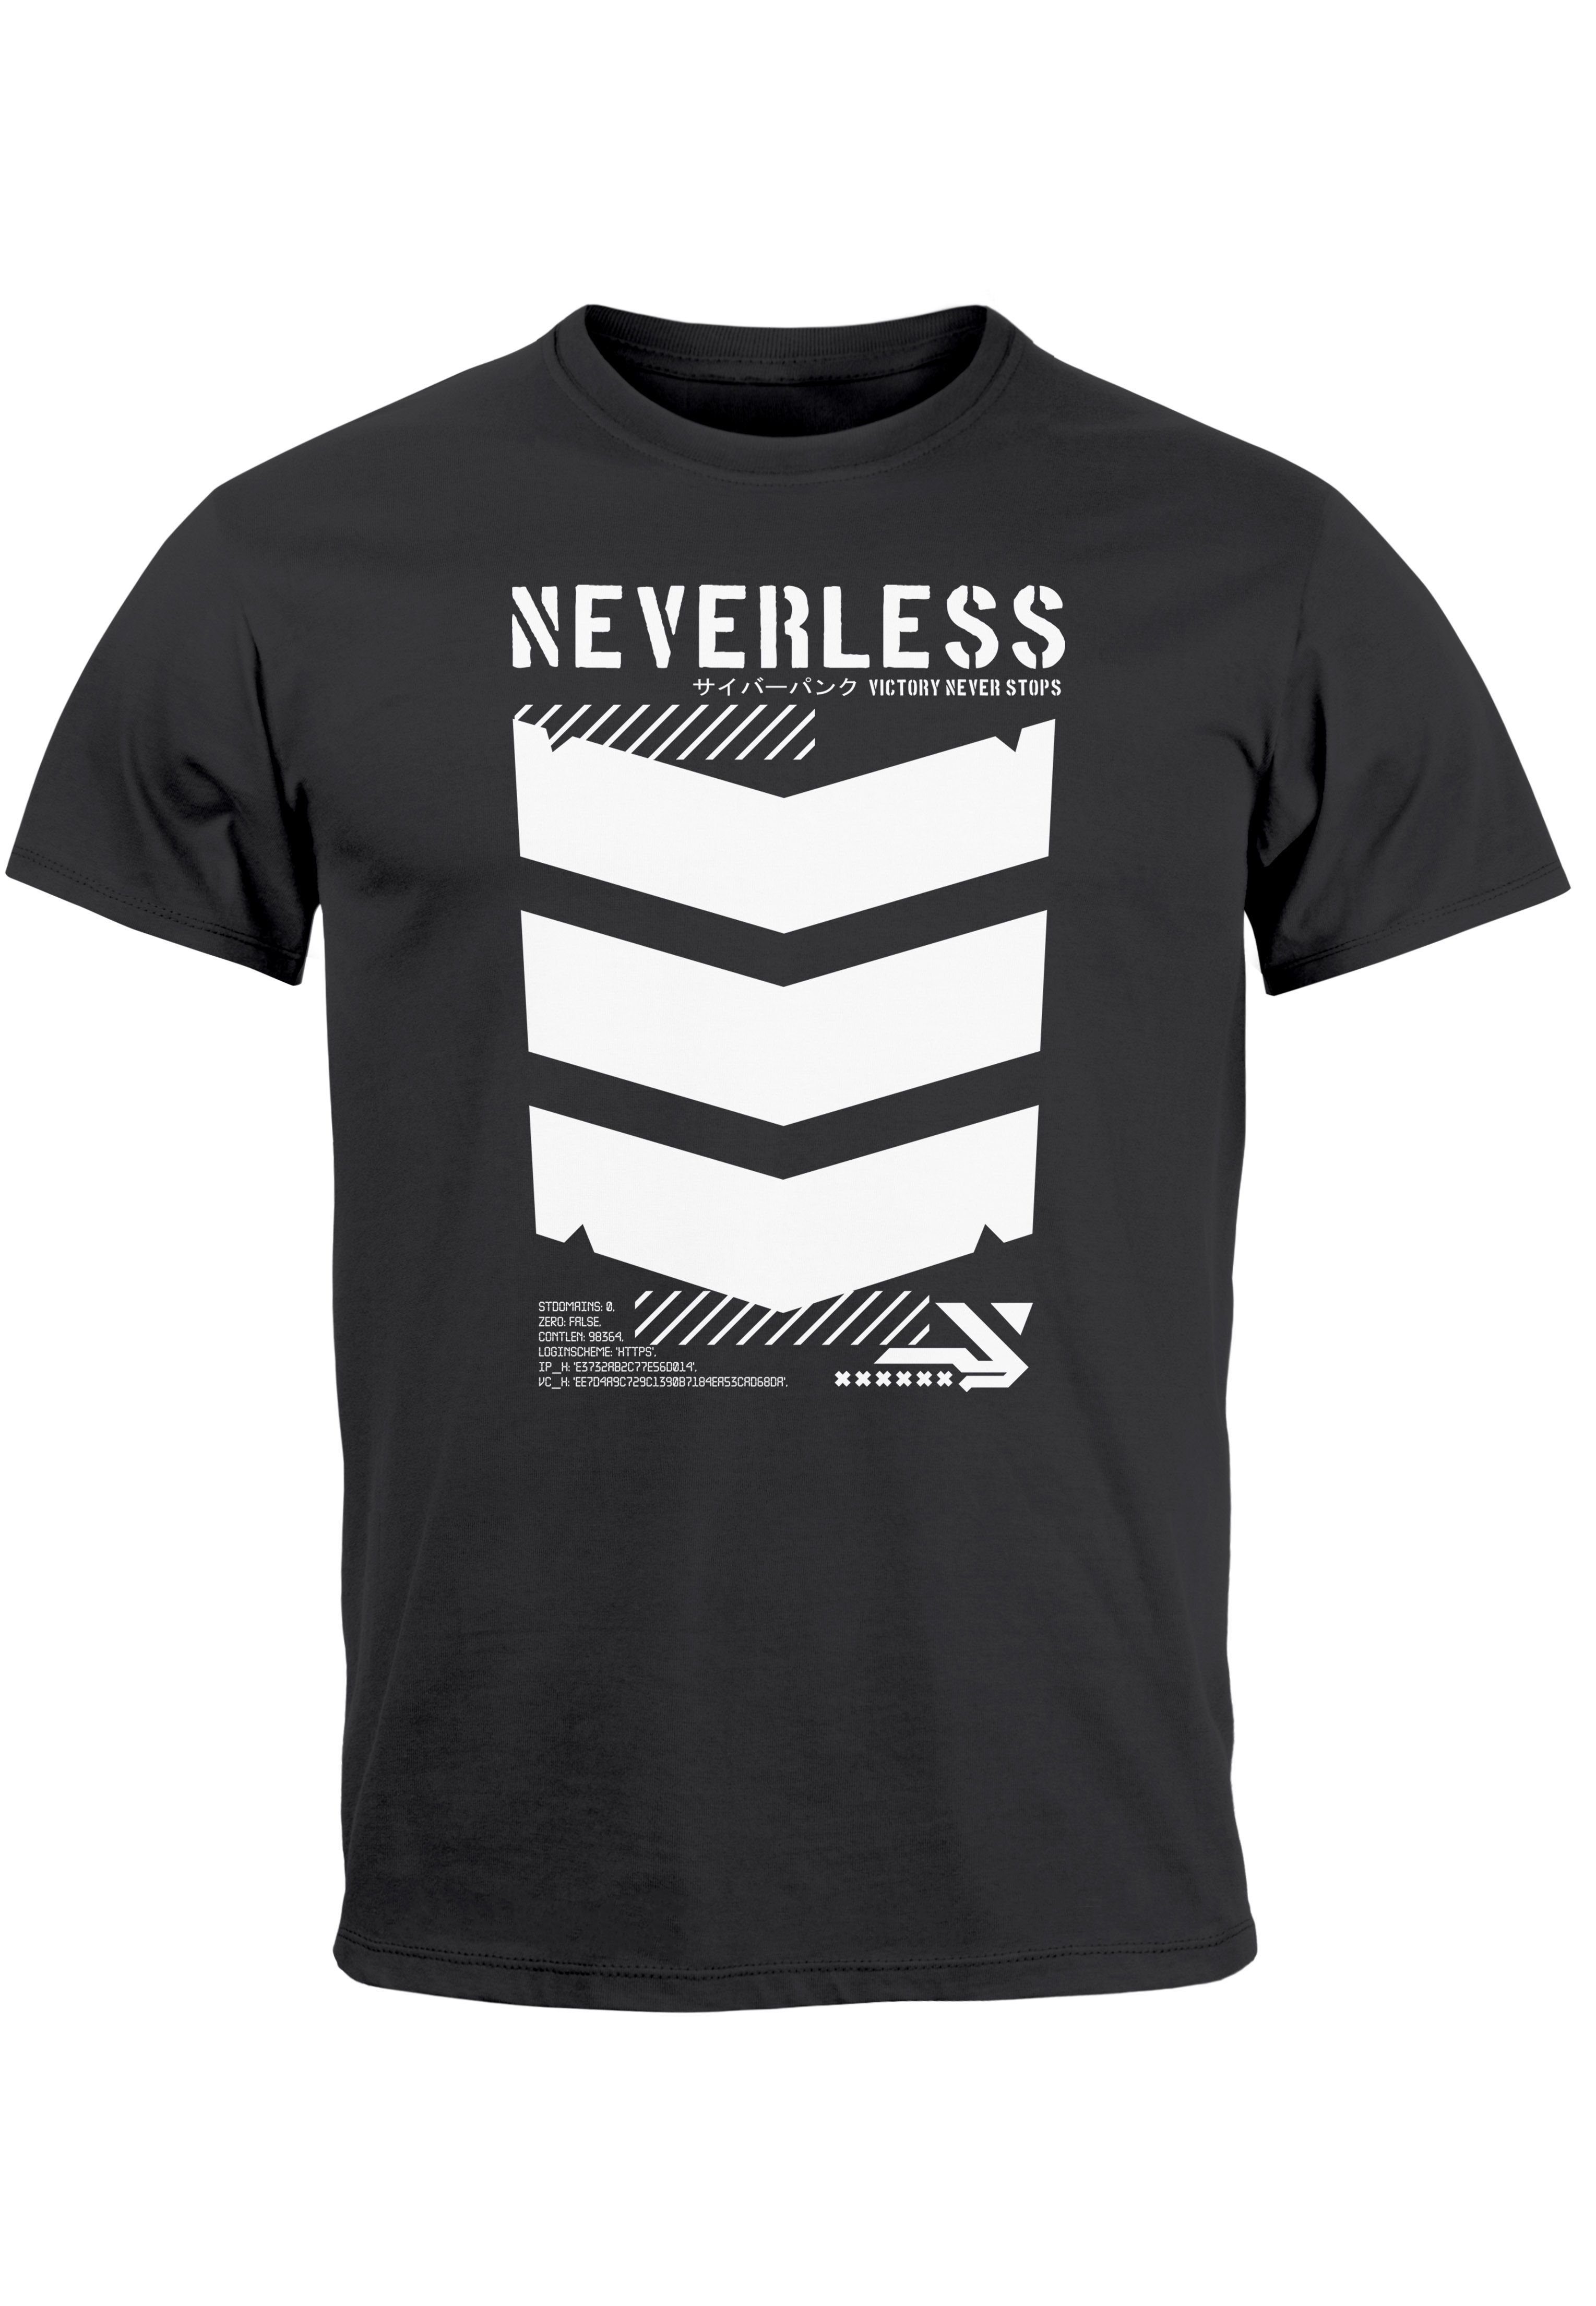 Neverless Print-Shirt Herren T-Shirt Techwear Military Streetstyle mit Motive Trend dunkelgrau Print Japanese Fas